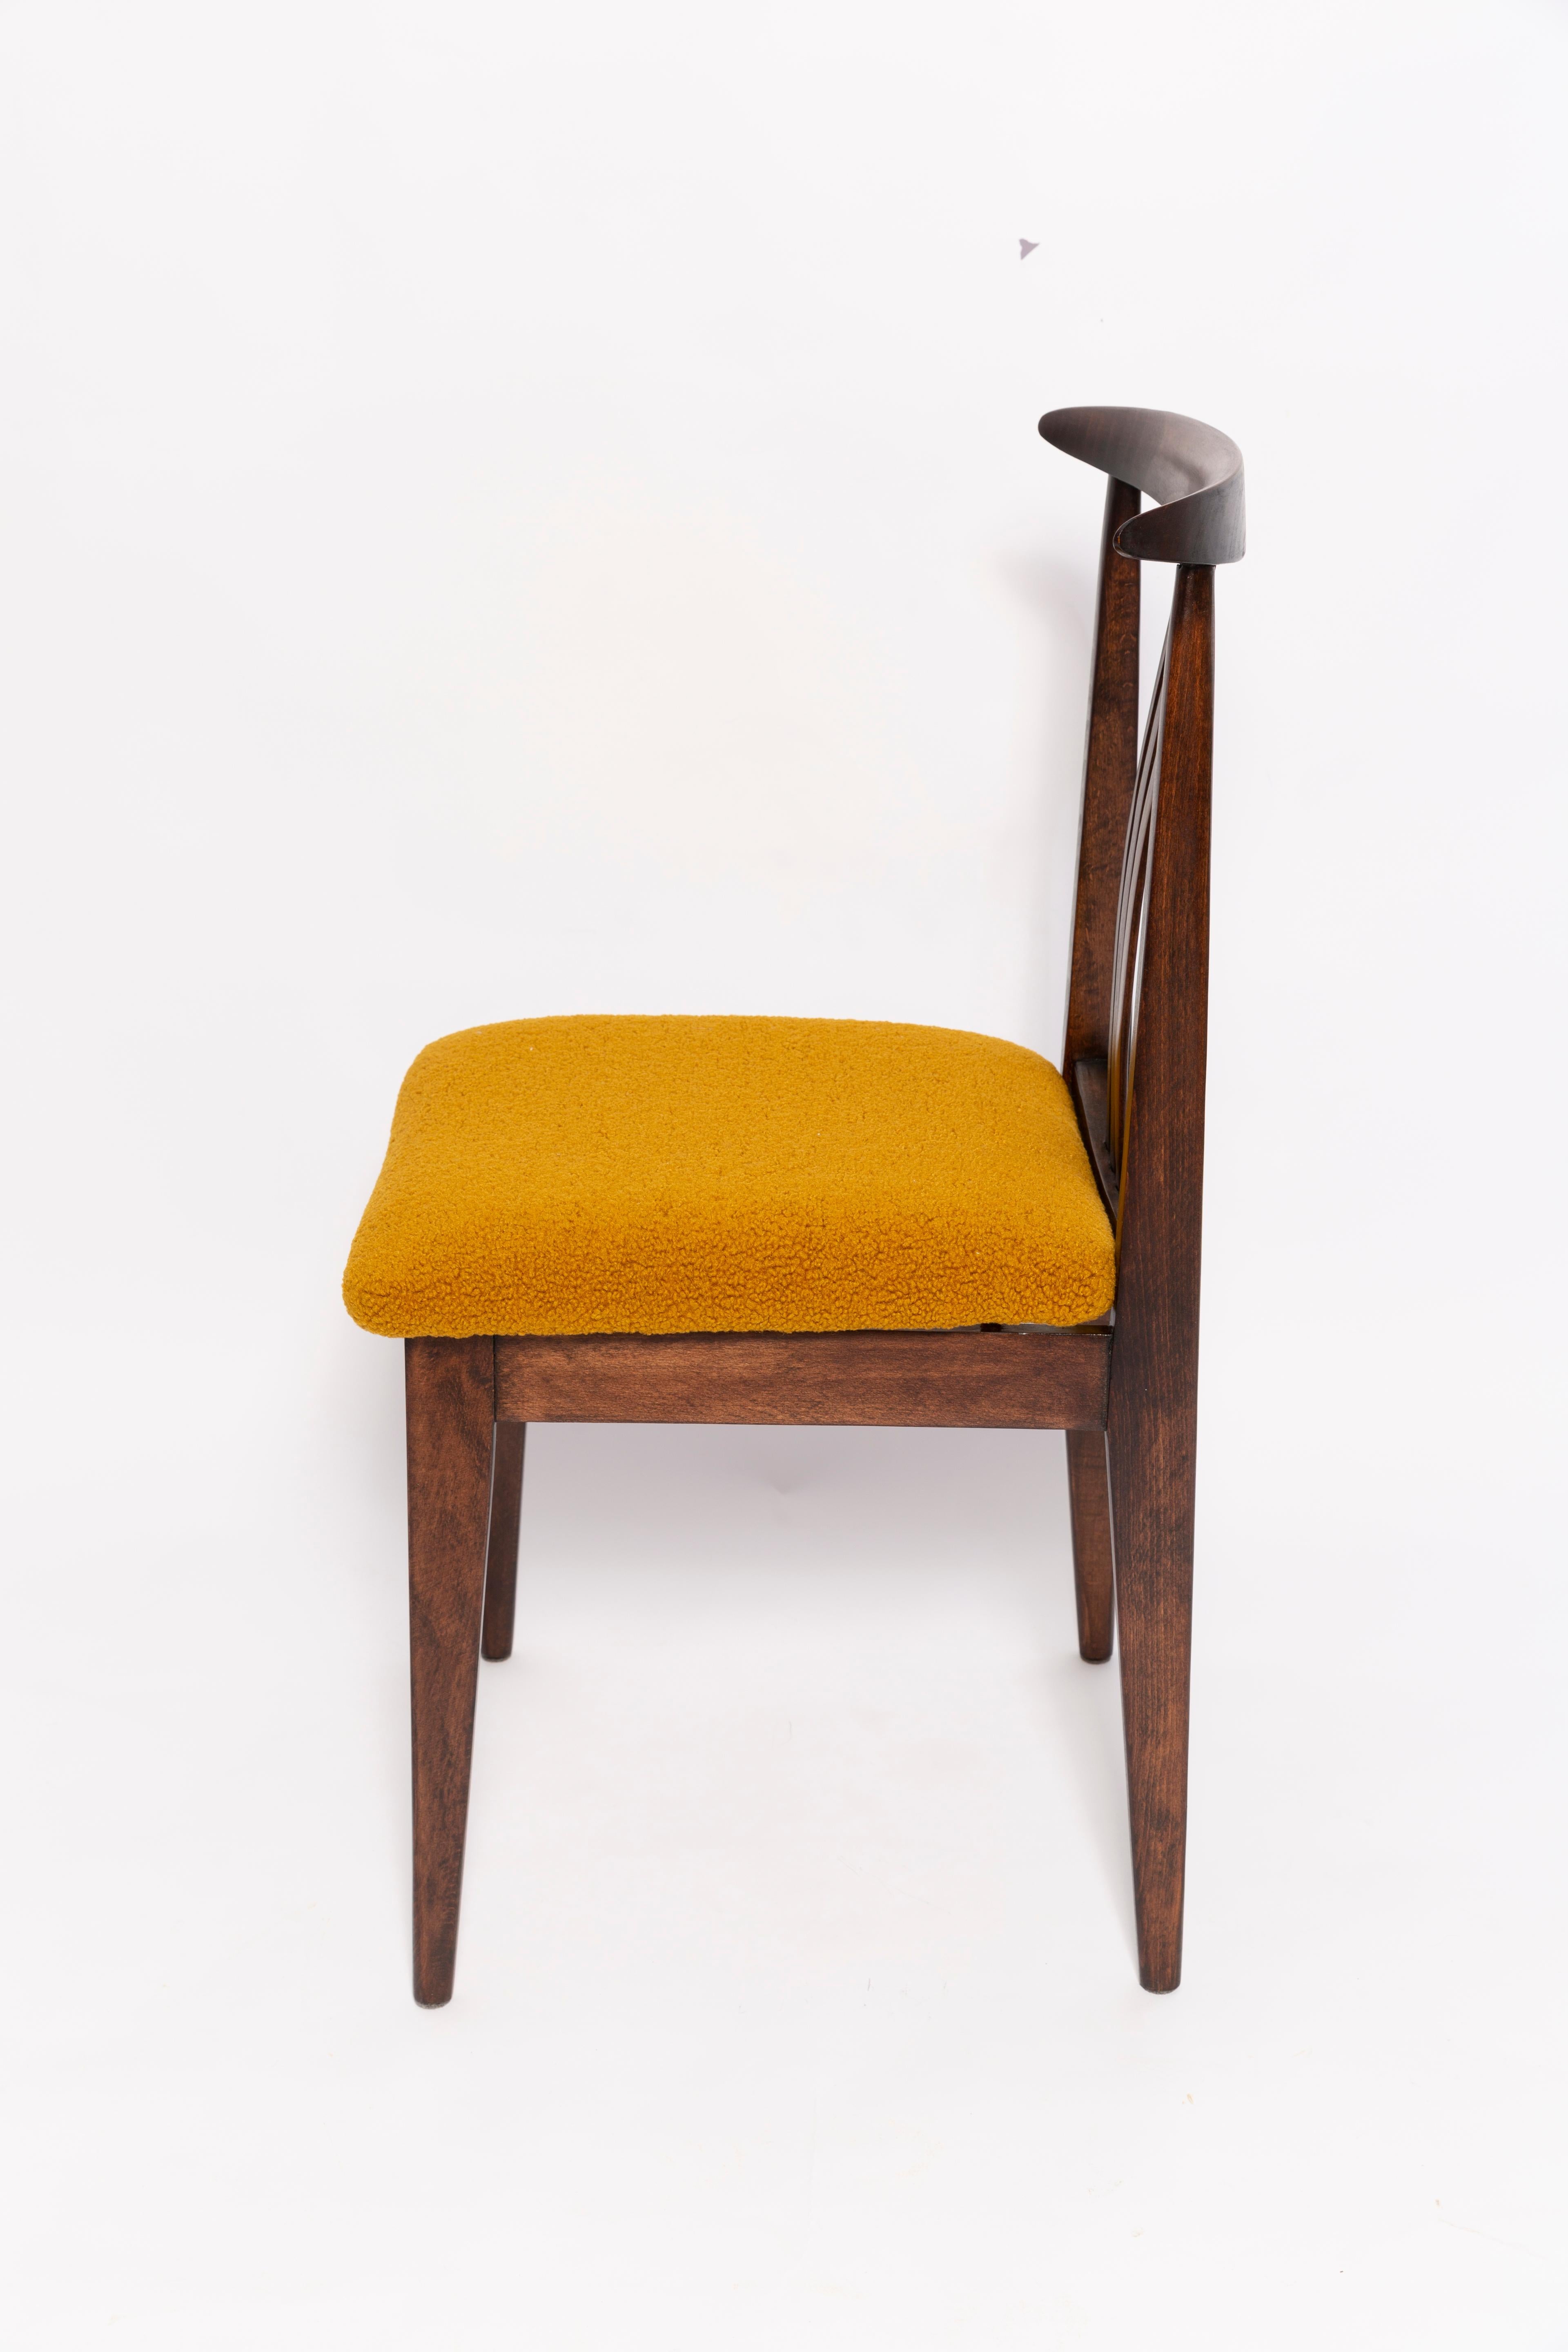 20th Century Mid-Century Ochre Boucle Chair, Walnut Wood, M. Zielinski, Europe, 1960s For Sale